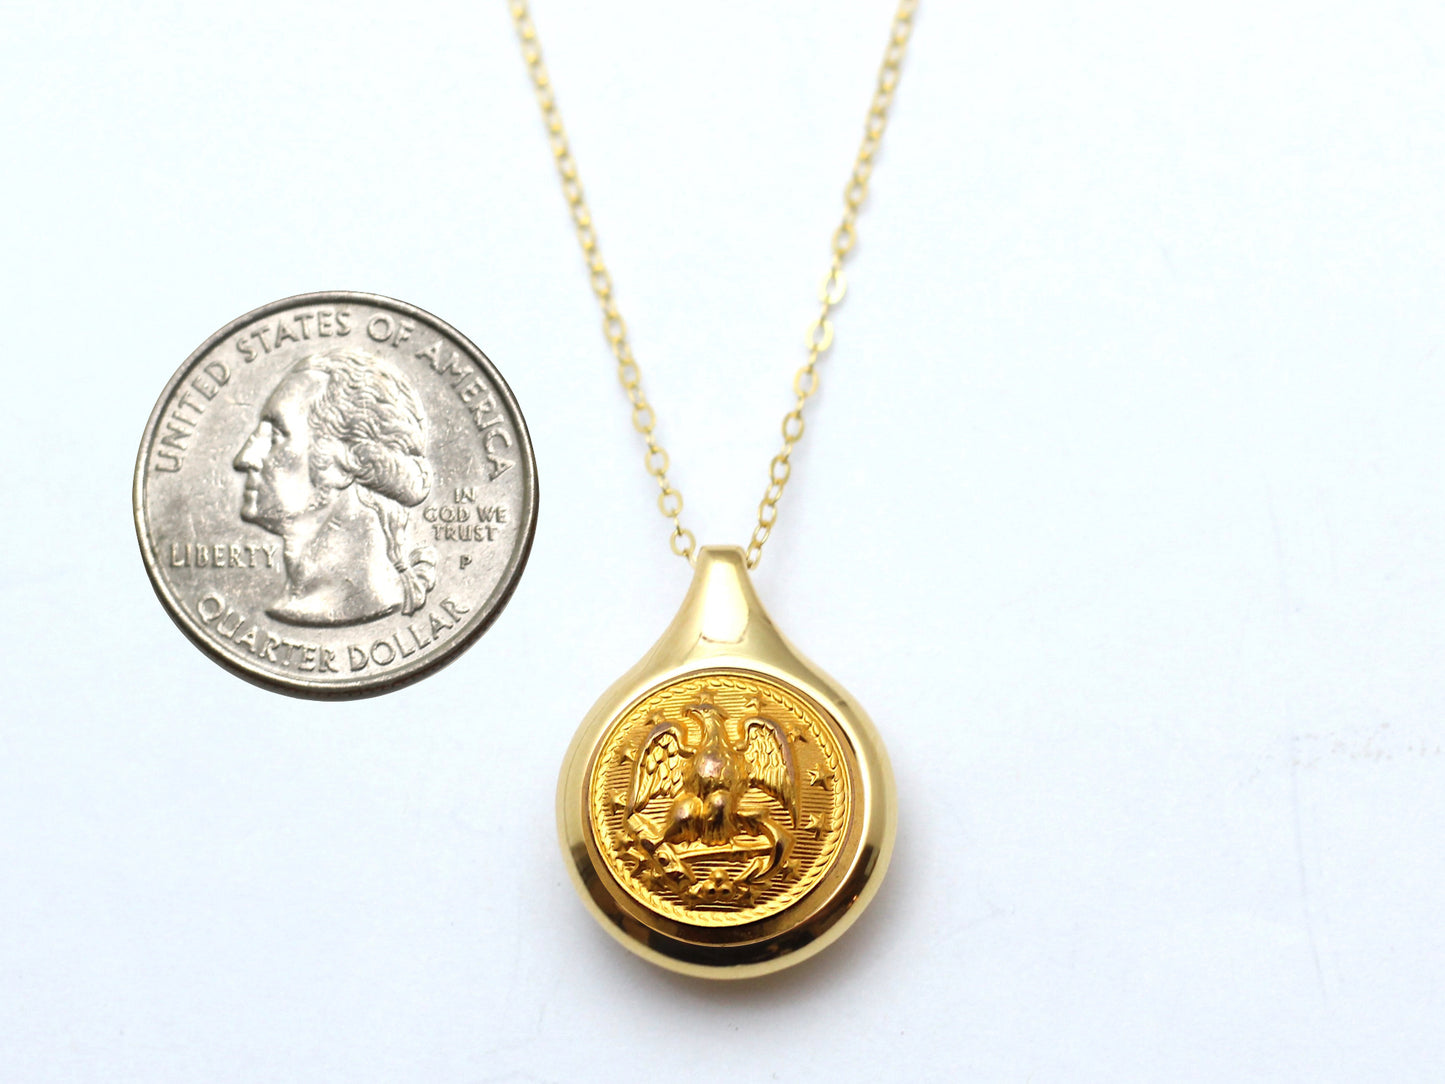 Navy Button Sleek Gold Necklace